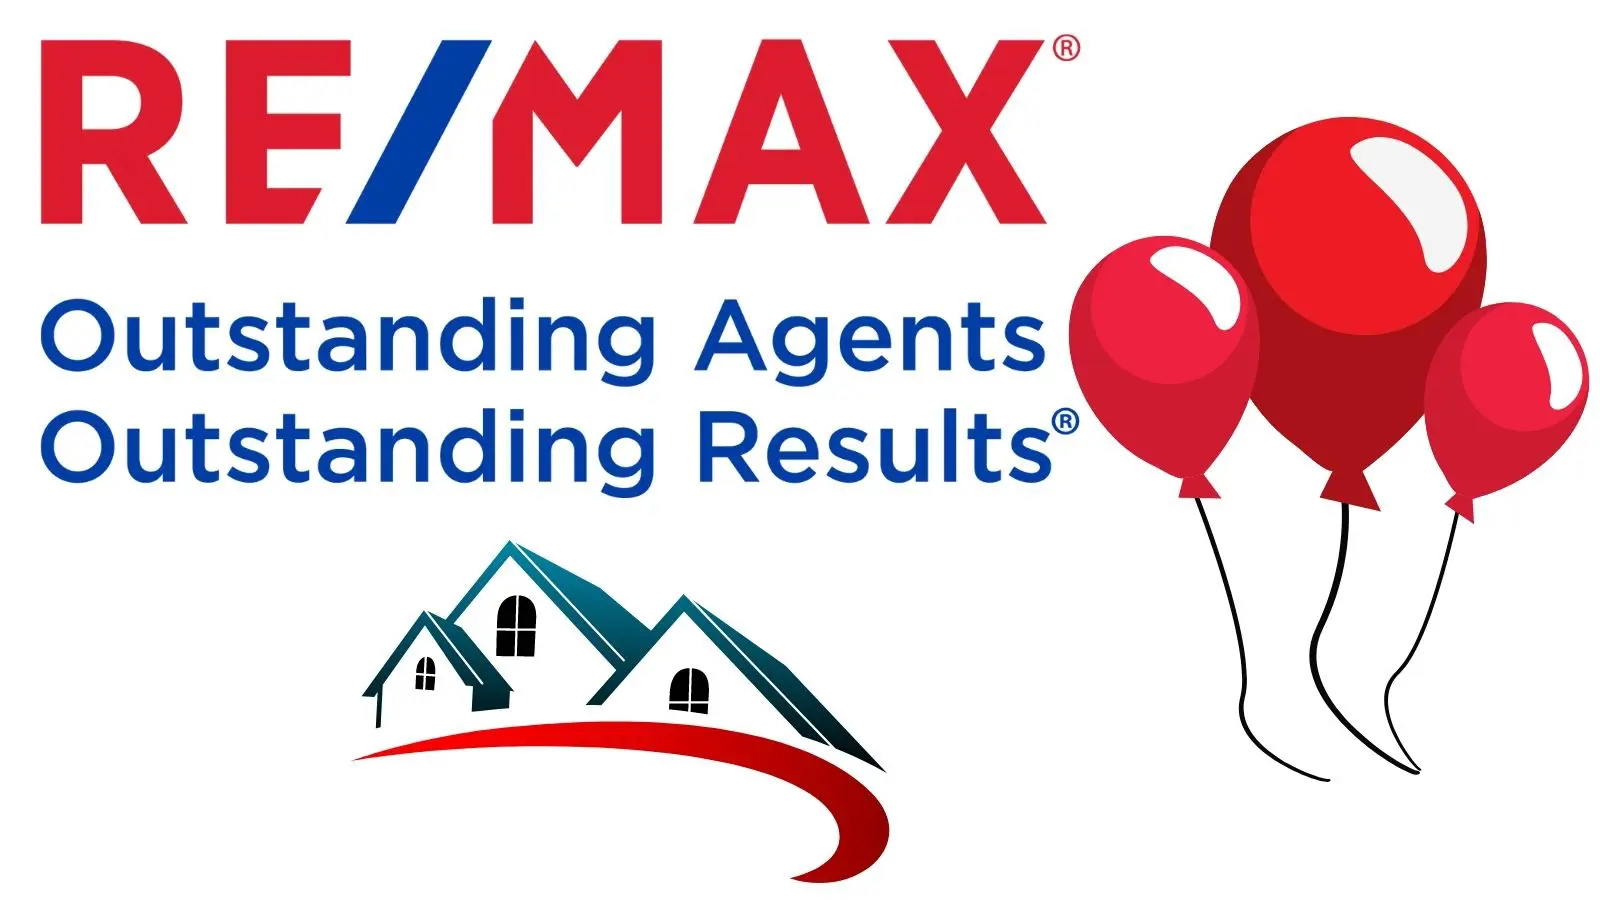 remax award winning agents